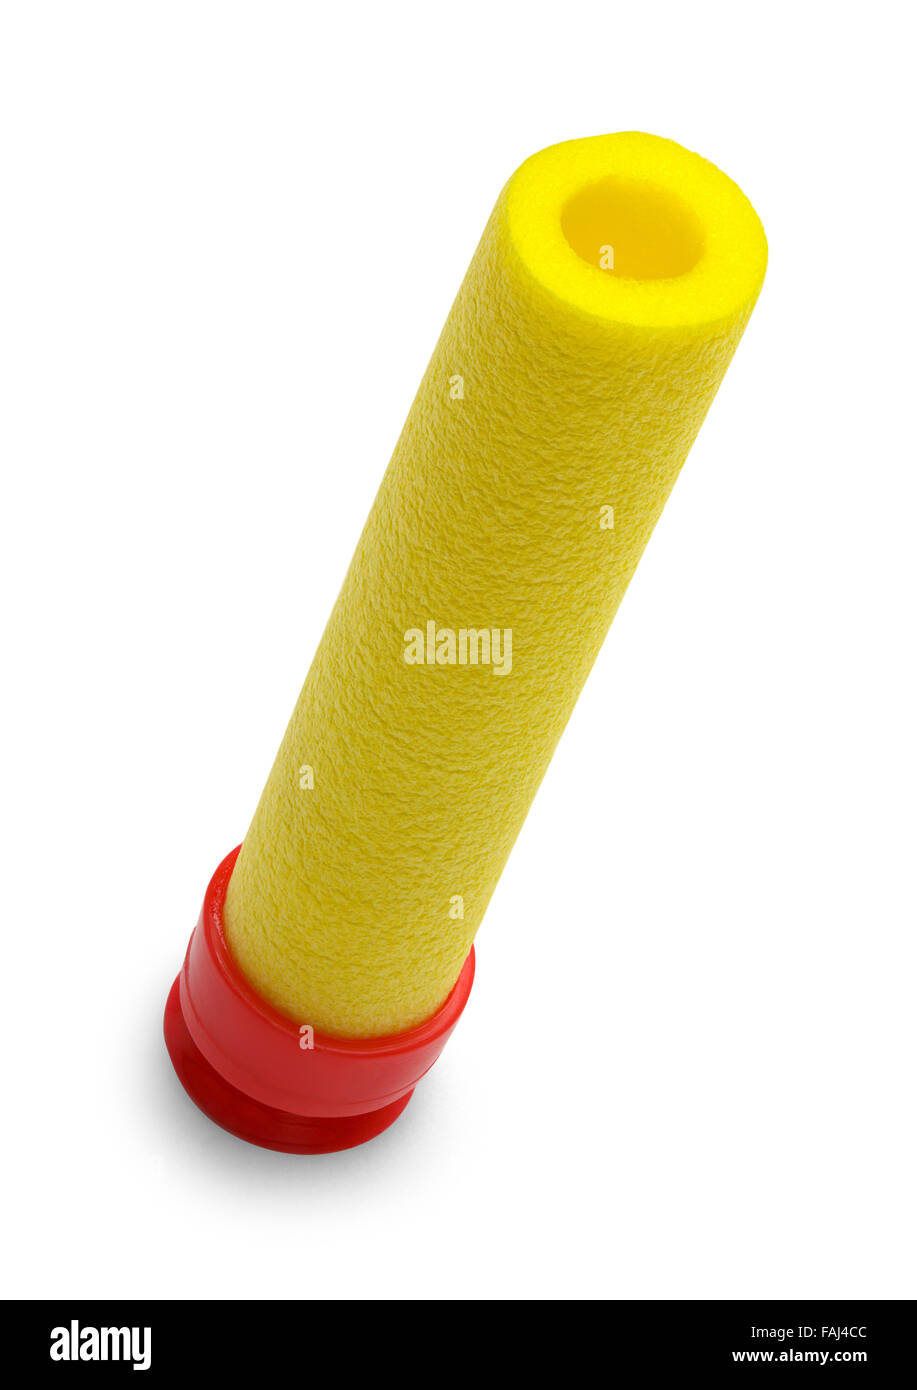 Single Yellow Toy Sponge Dart Isolated on a White Background. Stock Photo